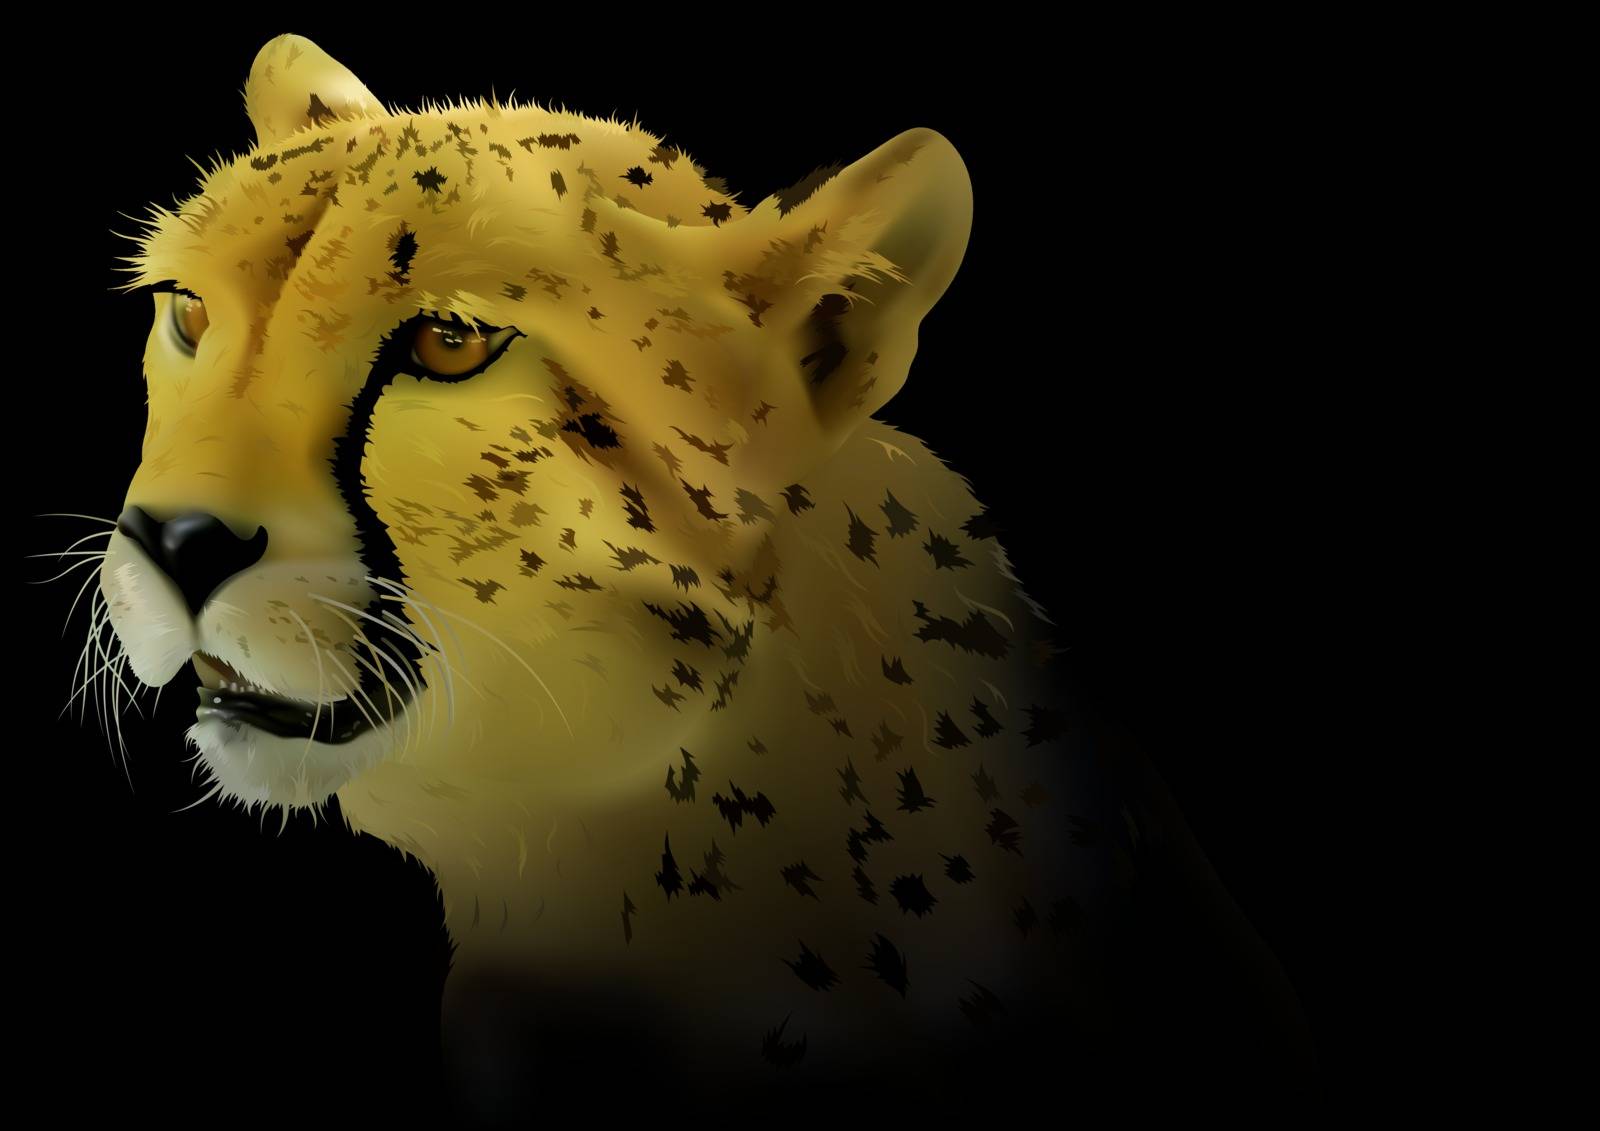 Cheetah on Black Background by illustratorCZ